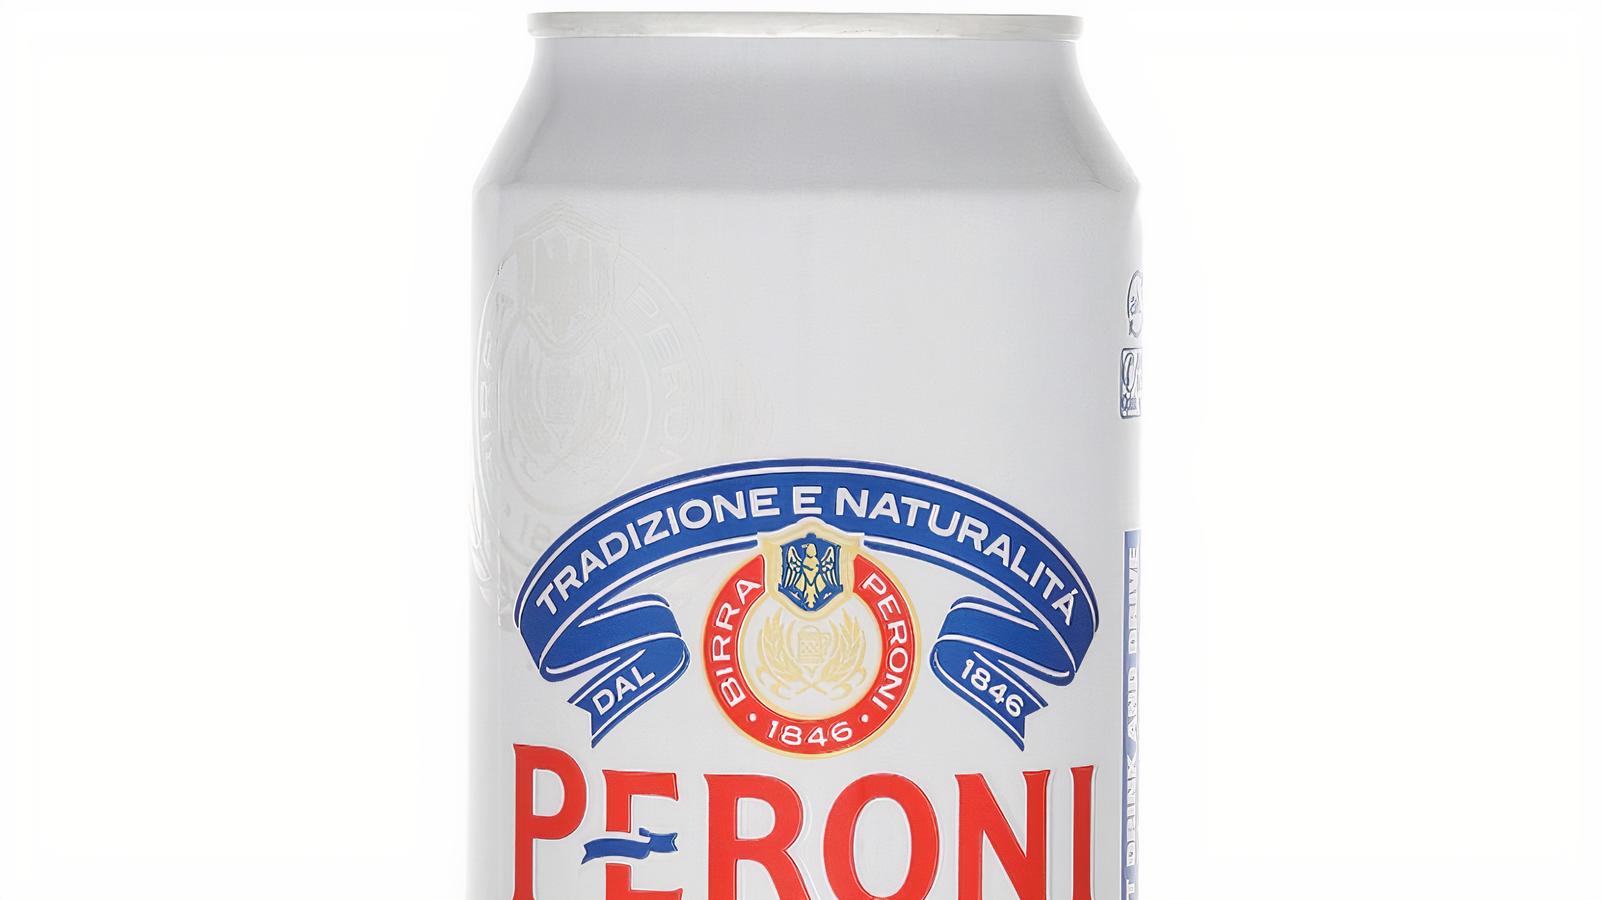 Peroni Nastro Azzurro, 473mL beer (5.1% ABV)